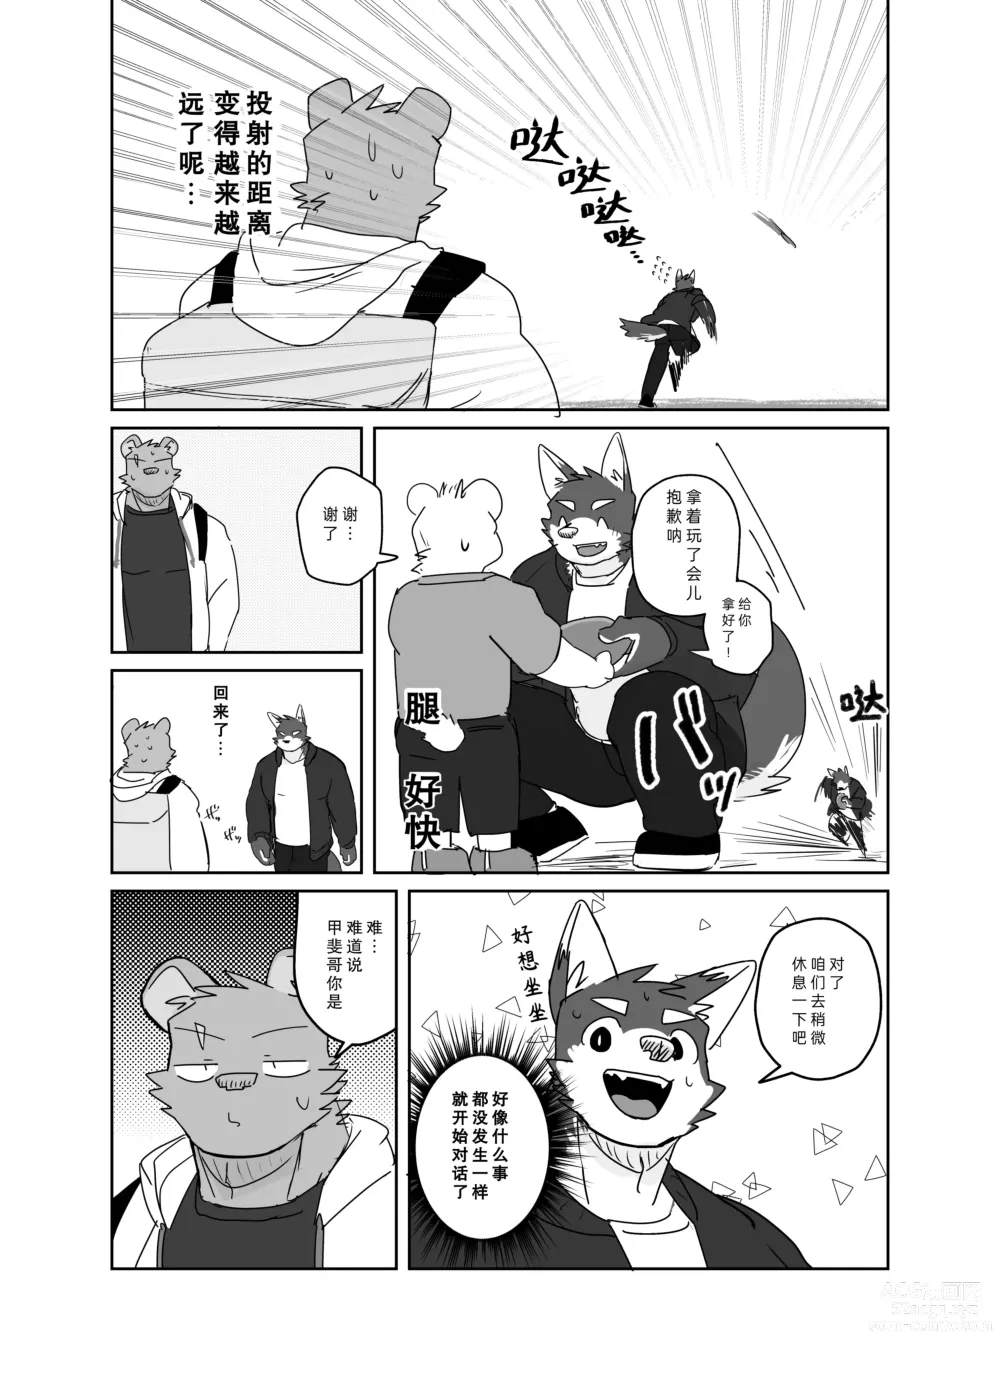 Page 4 of manga 飞盘